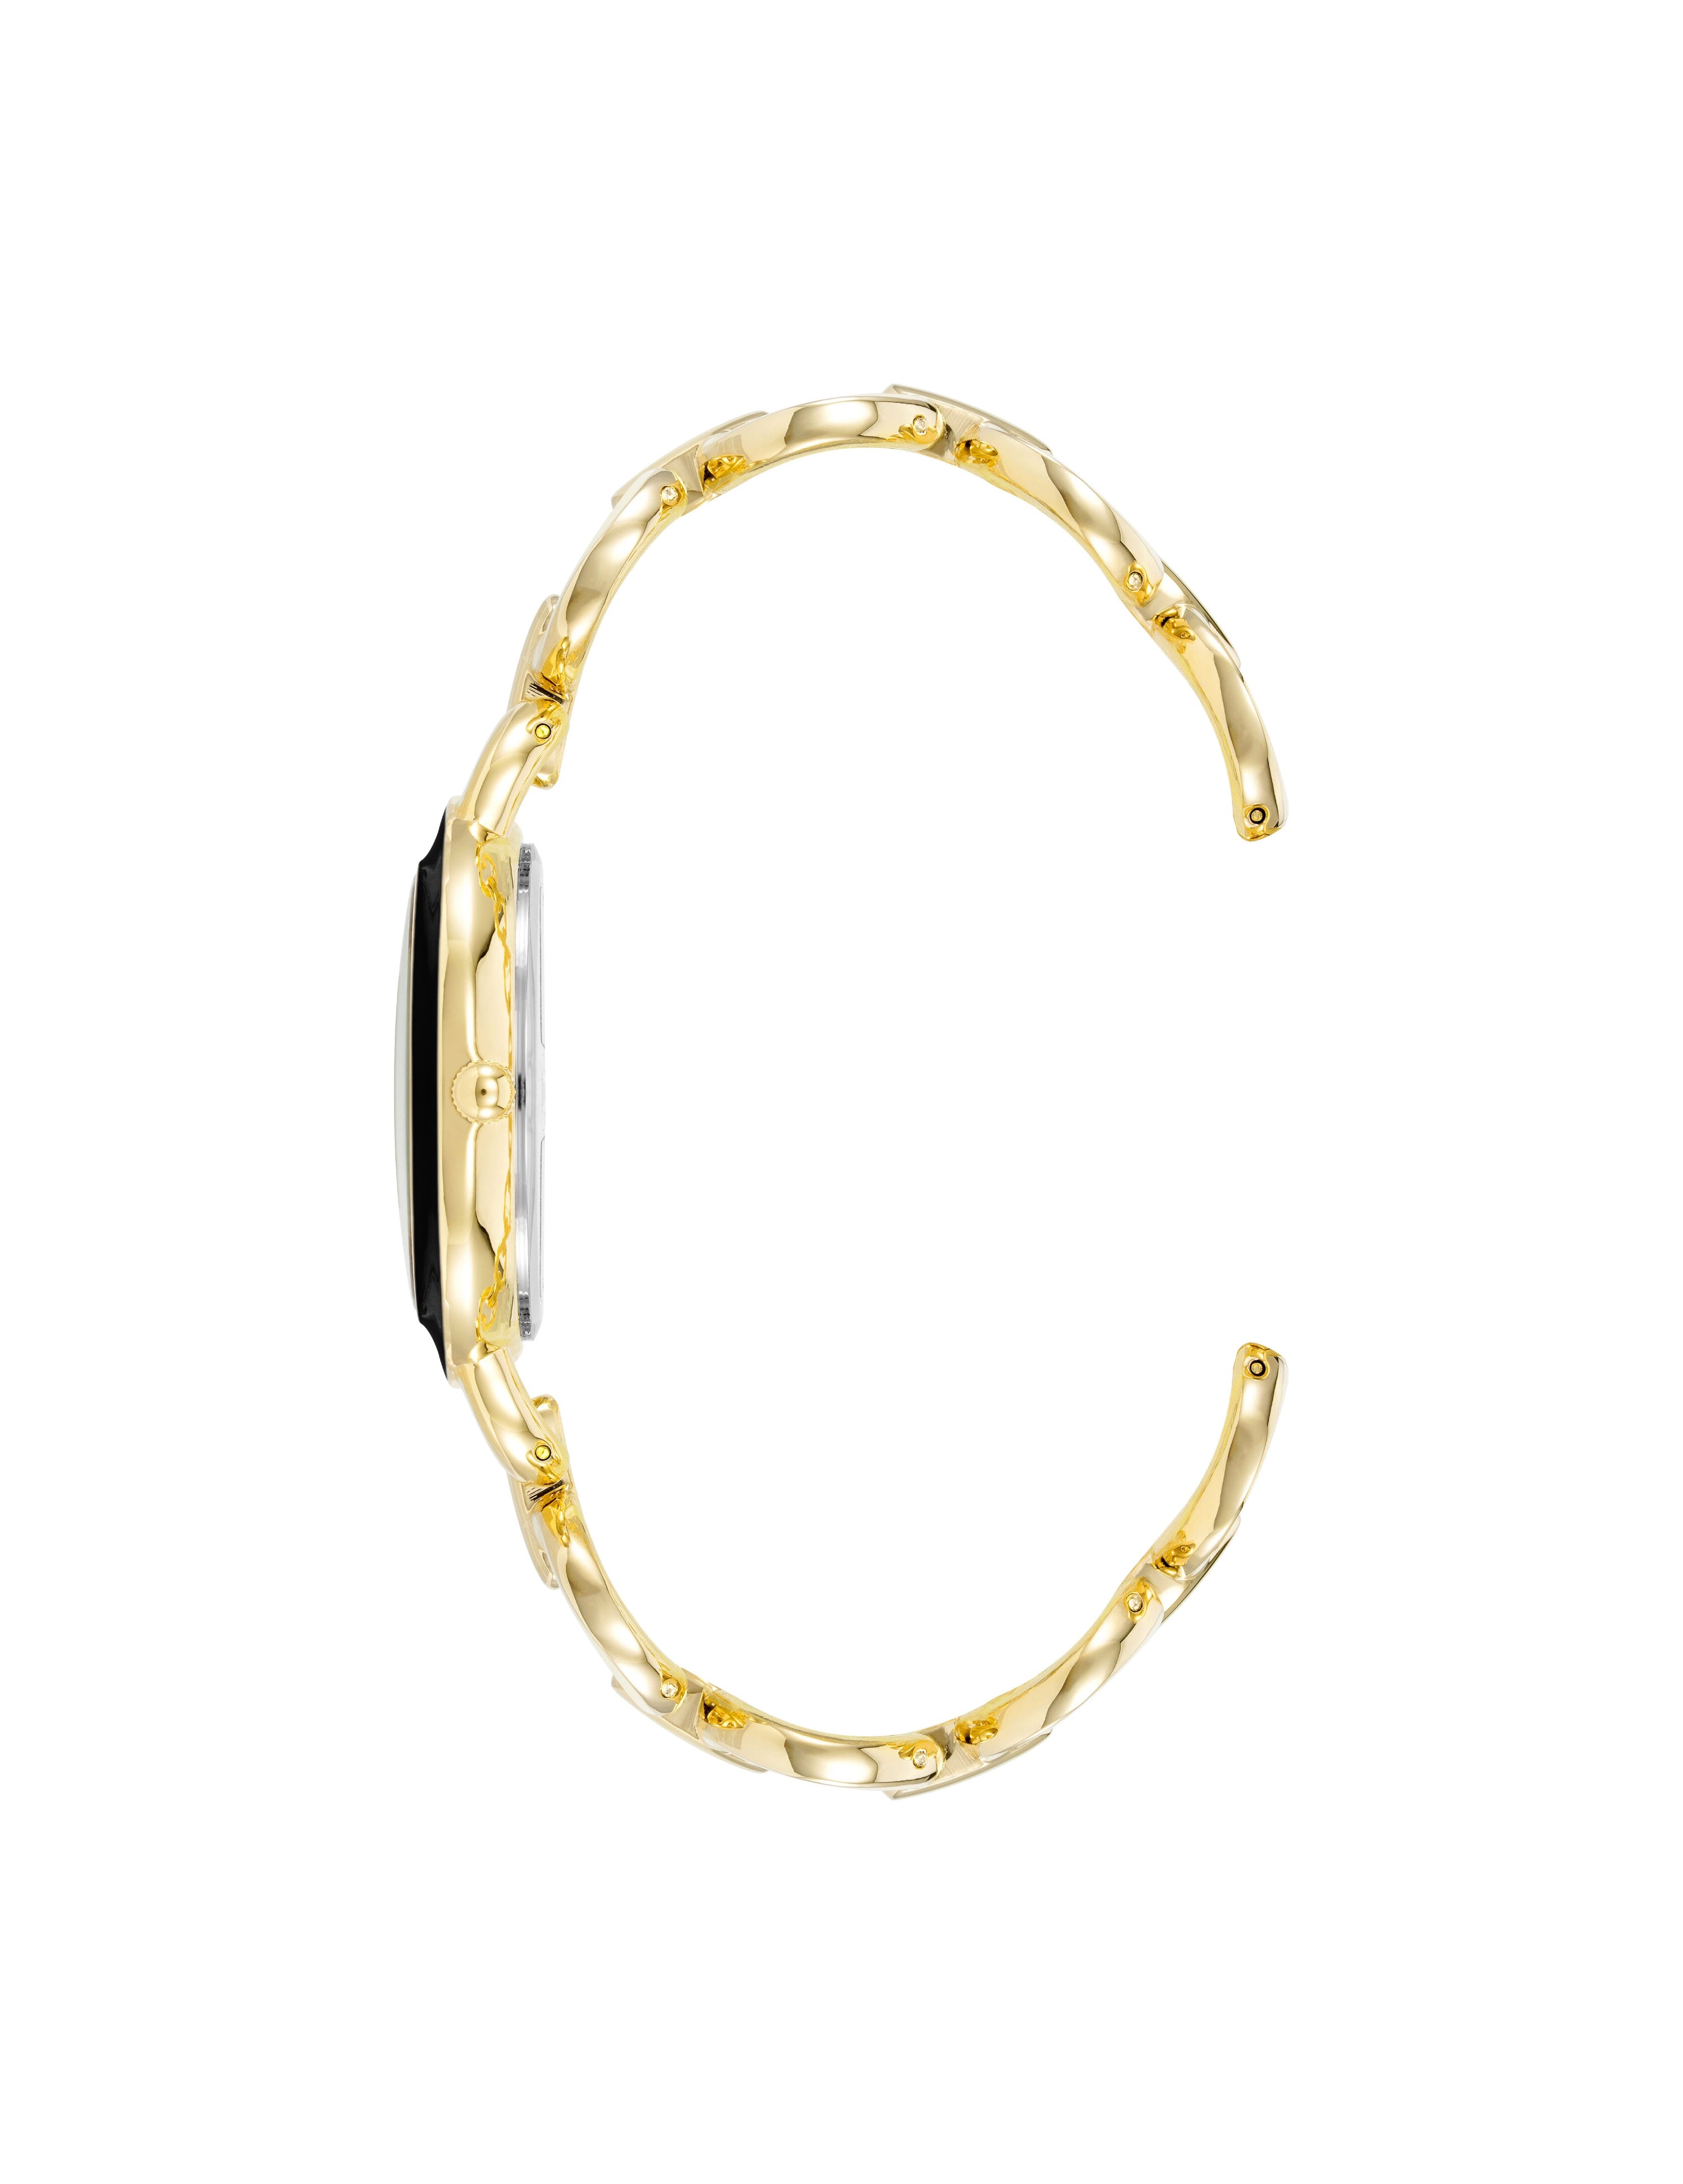 Anne Klein Women's Boyfriend Circular Link Bracelet Watch Set in Black / Gold Tone